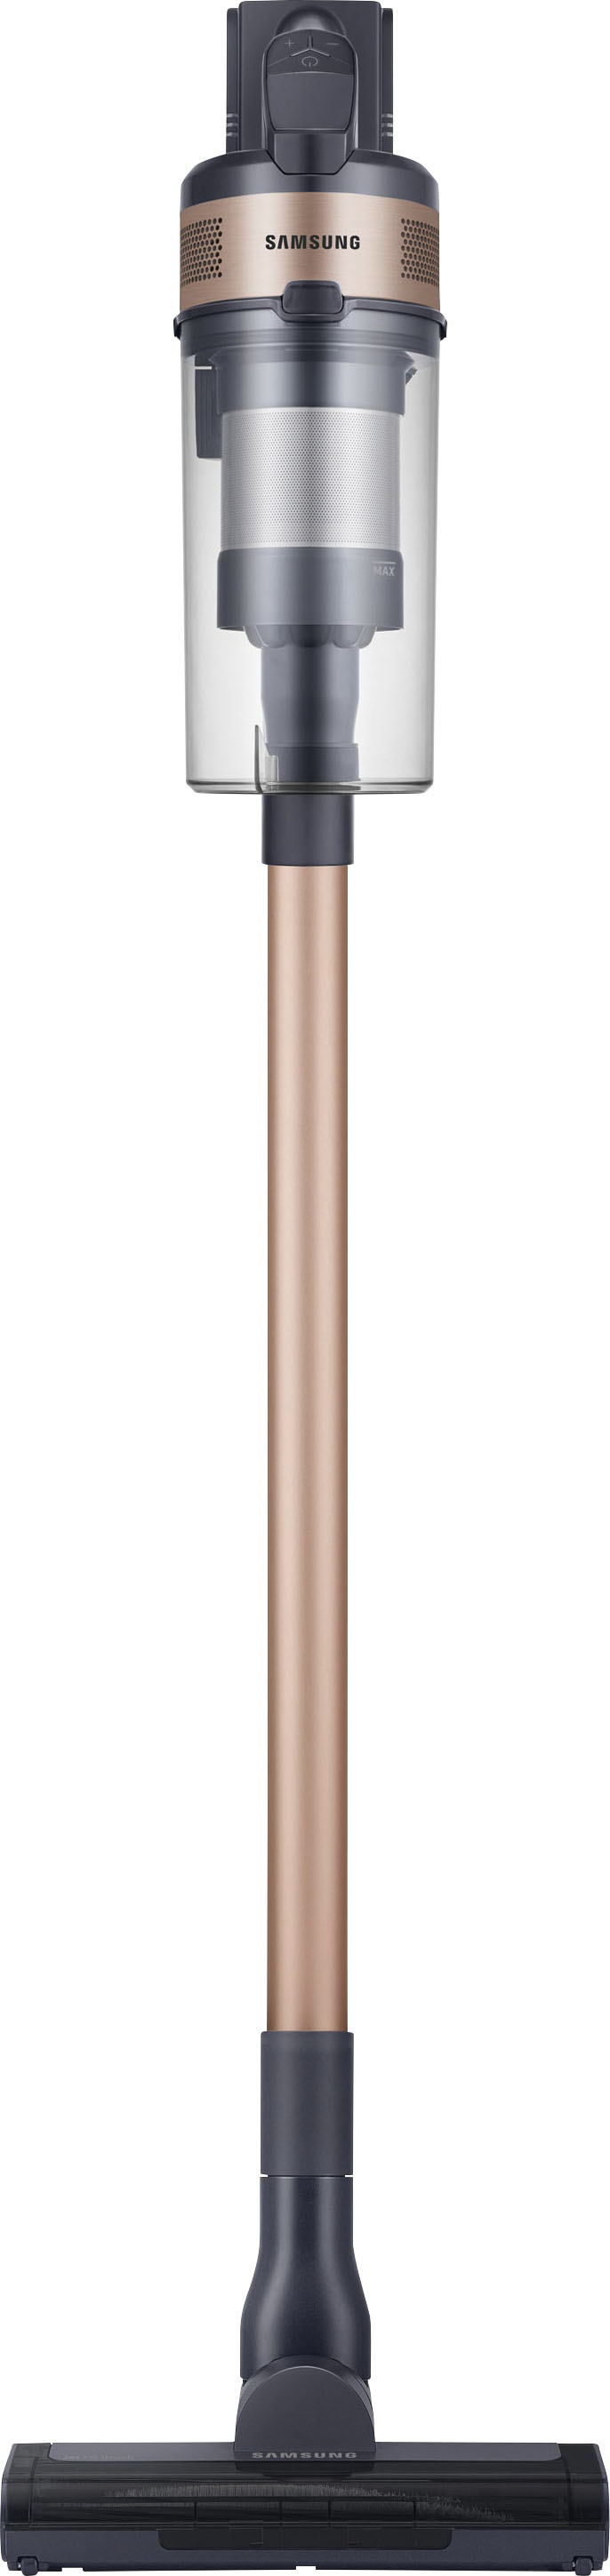 Samsung - Jet™ 60 Pet Cordless Stick Vacuum - Rose Gold